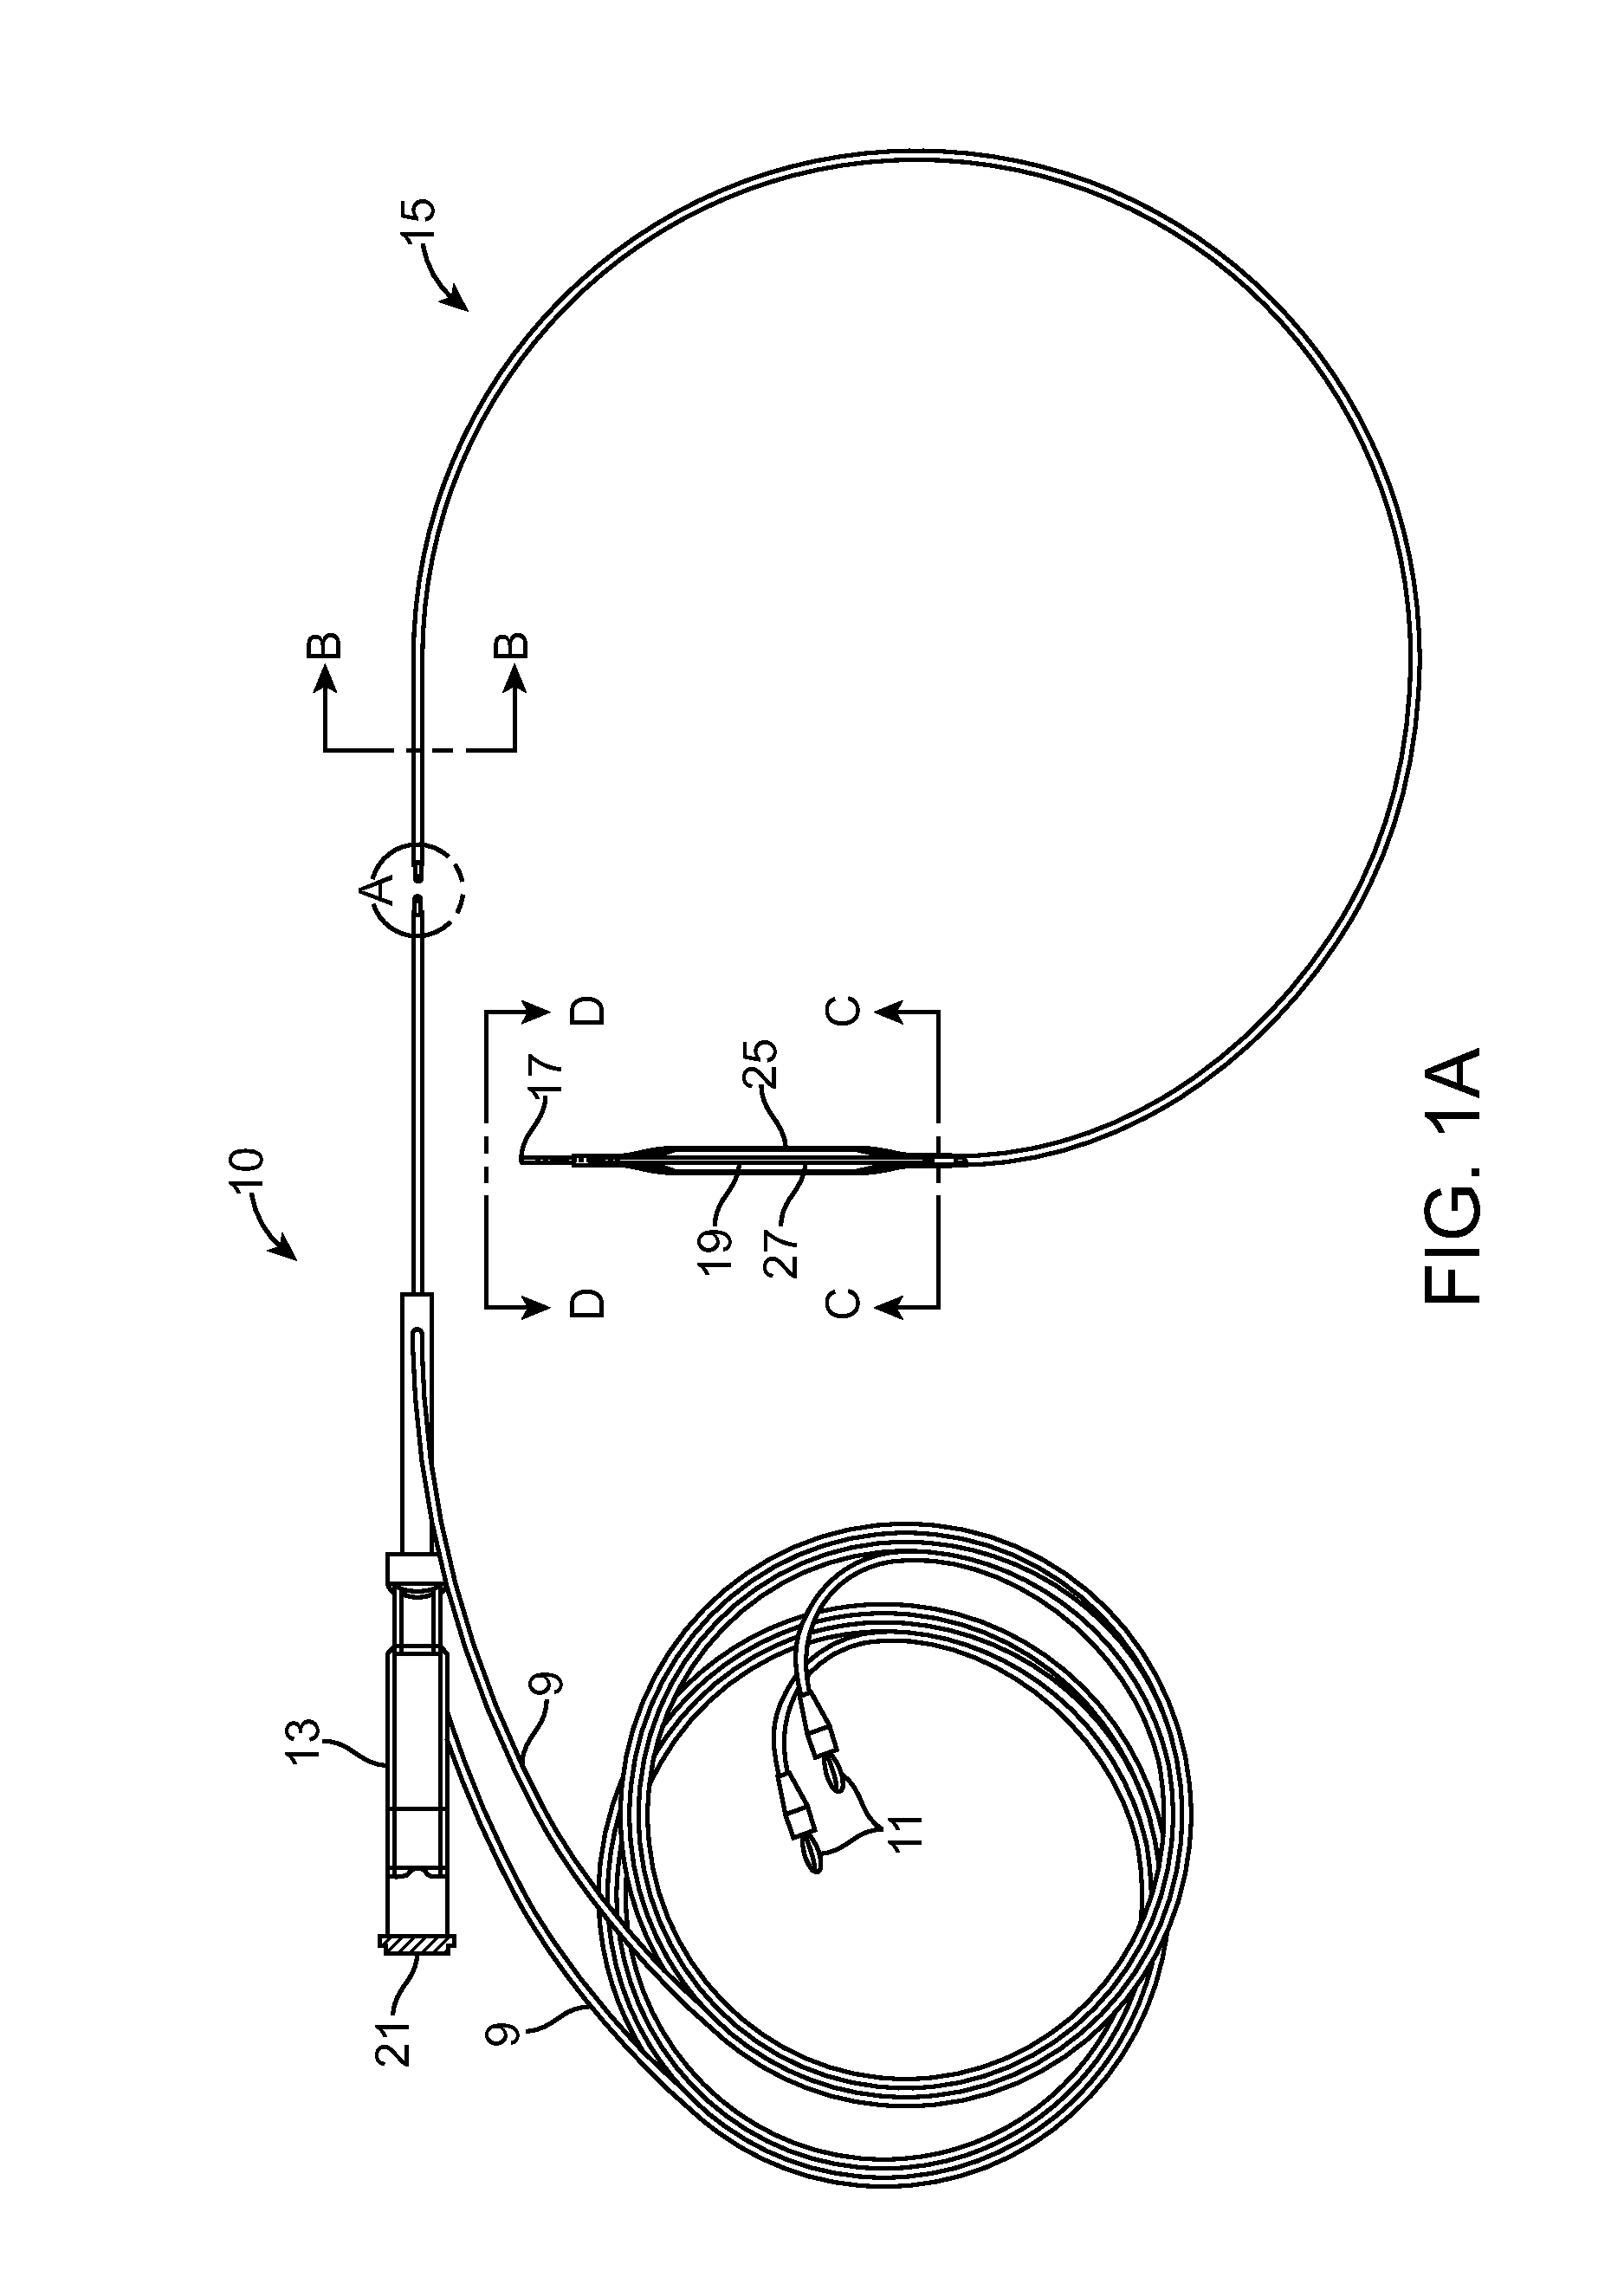 Balloon catheter method for reducing restenosis via irreversible electroporation